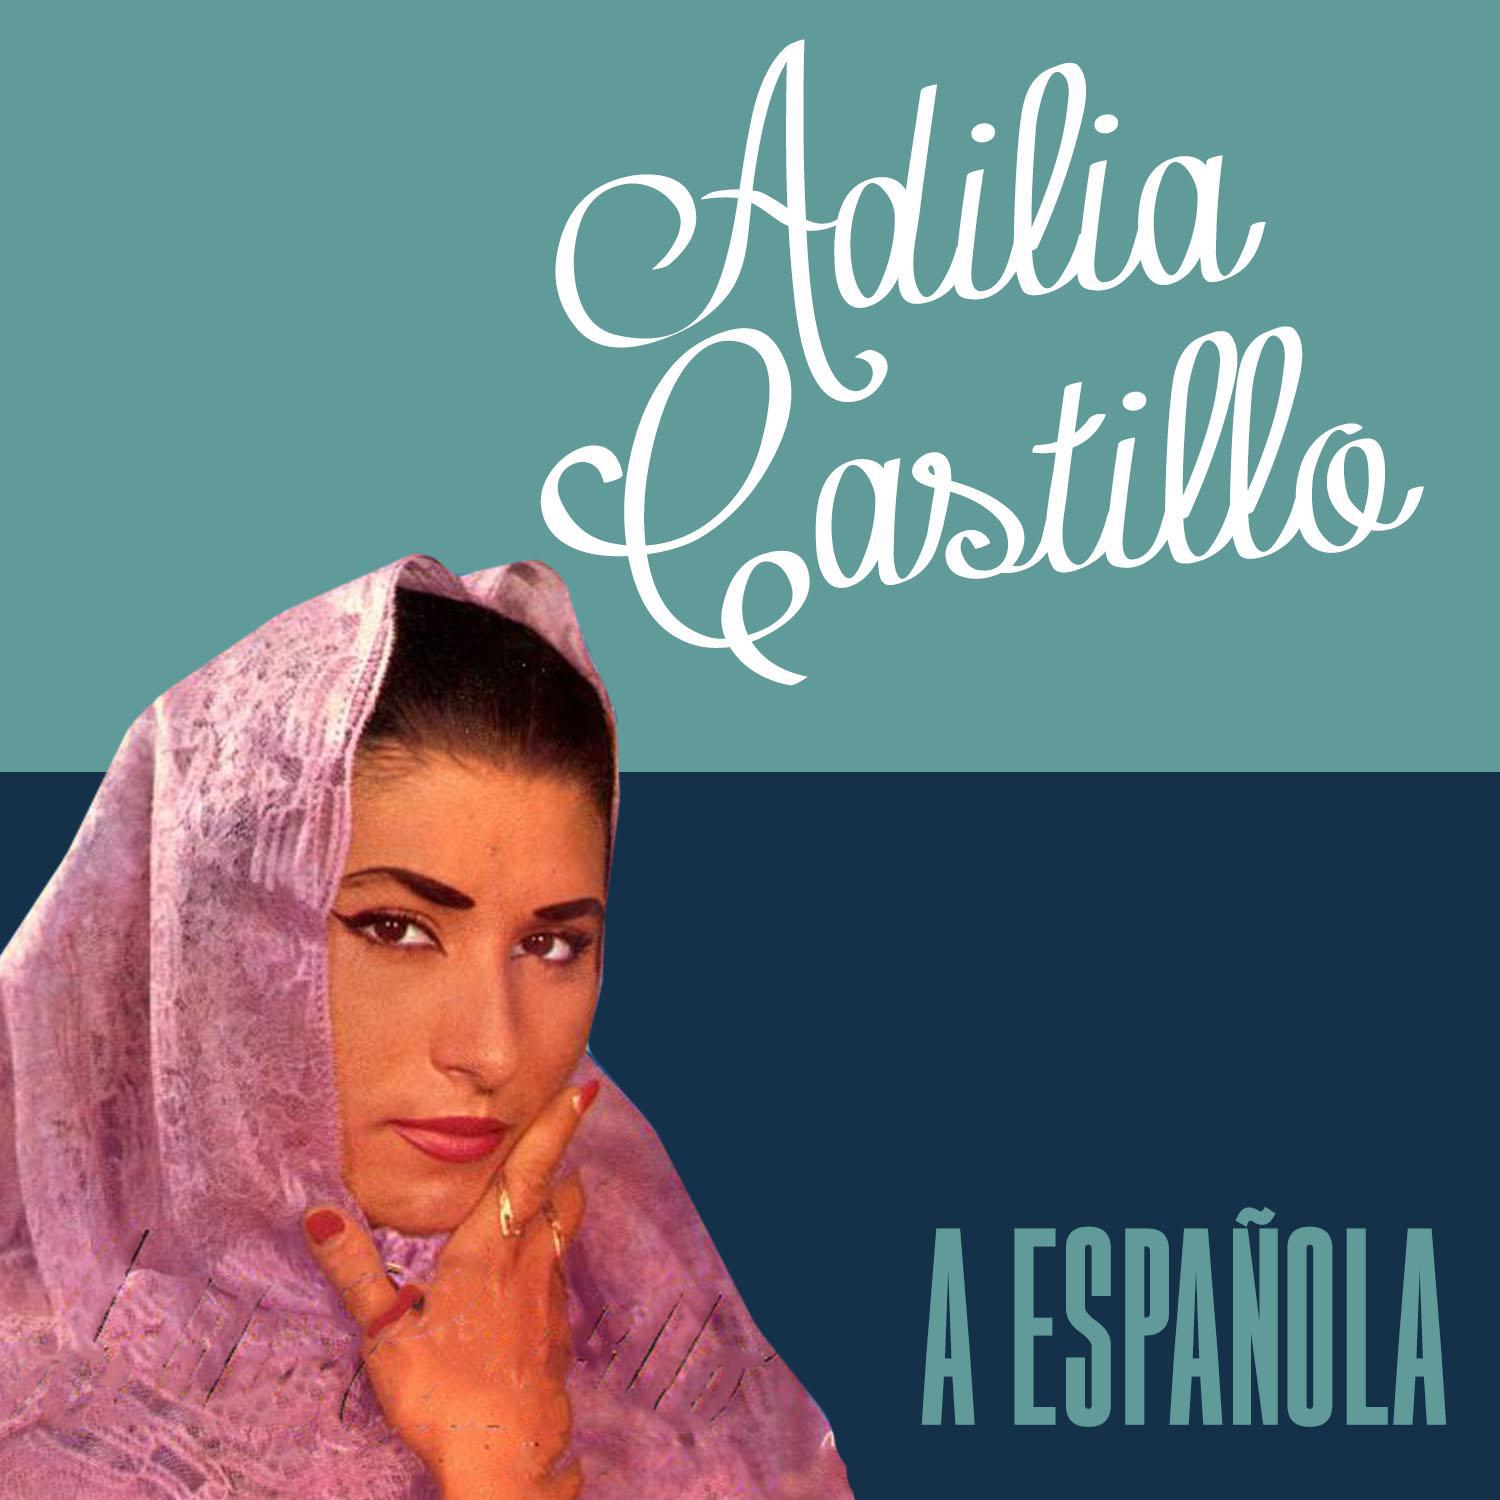 Adilia Castillo - A Española